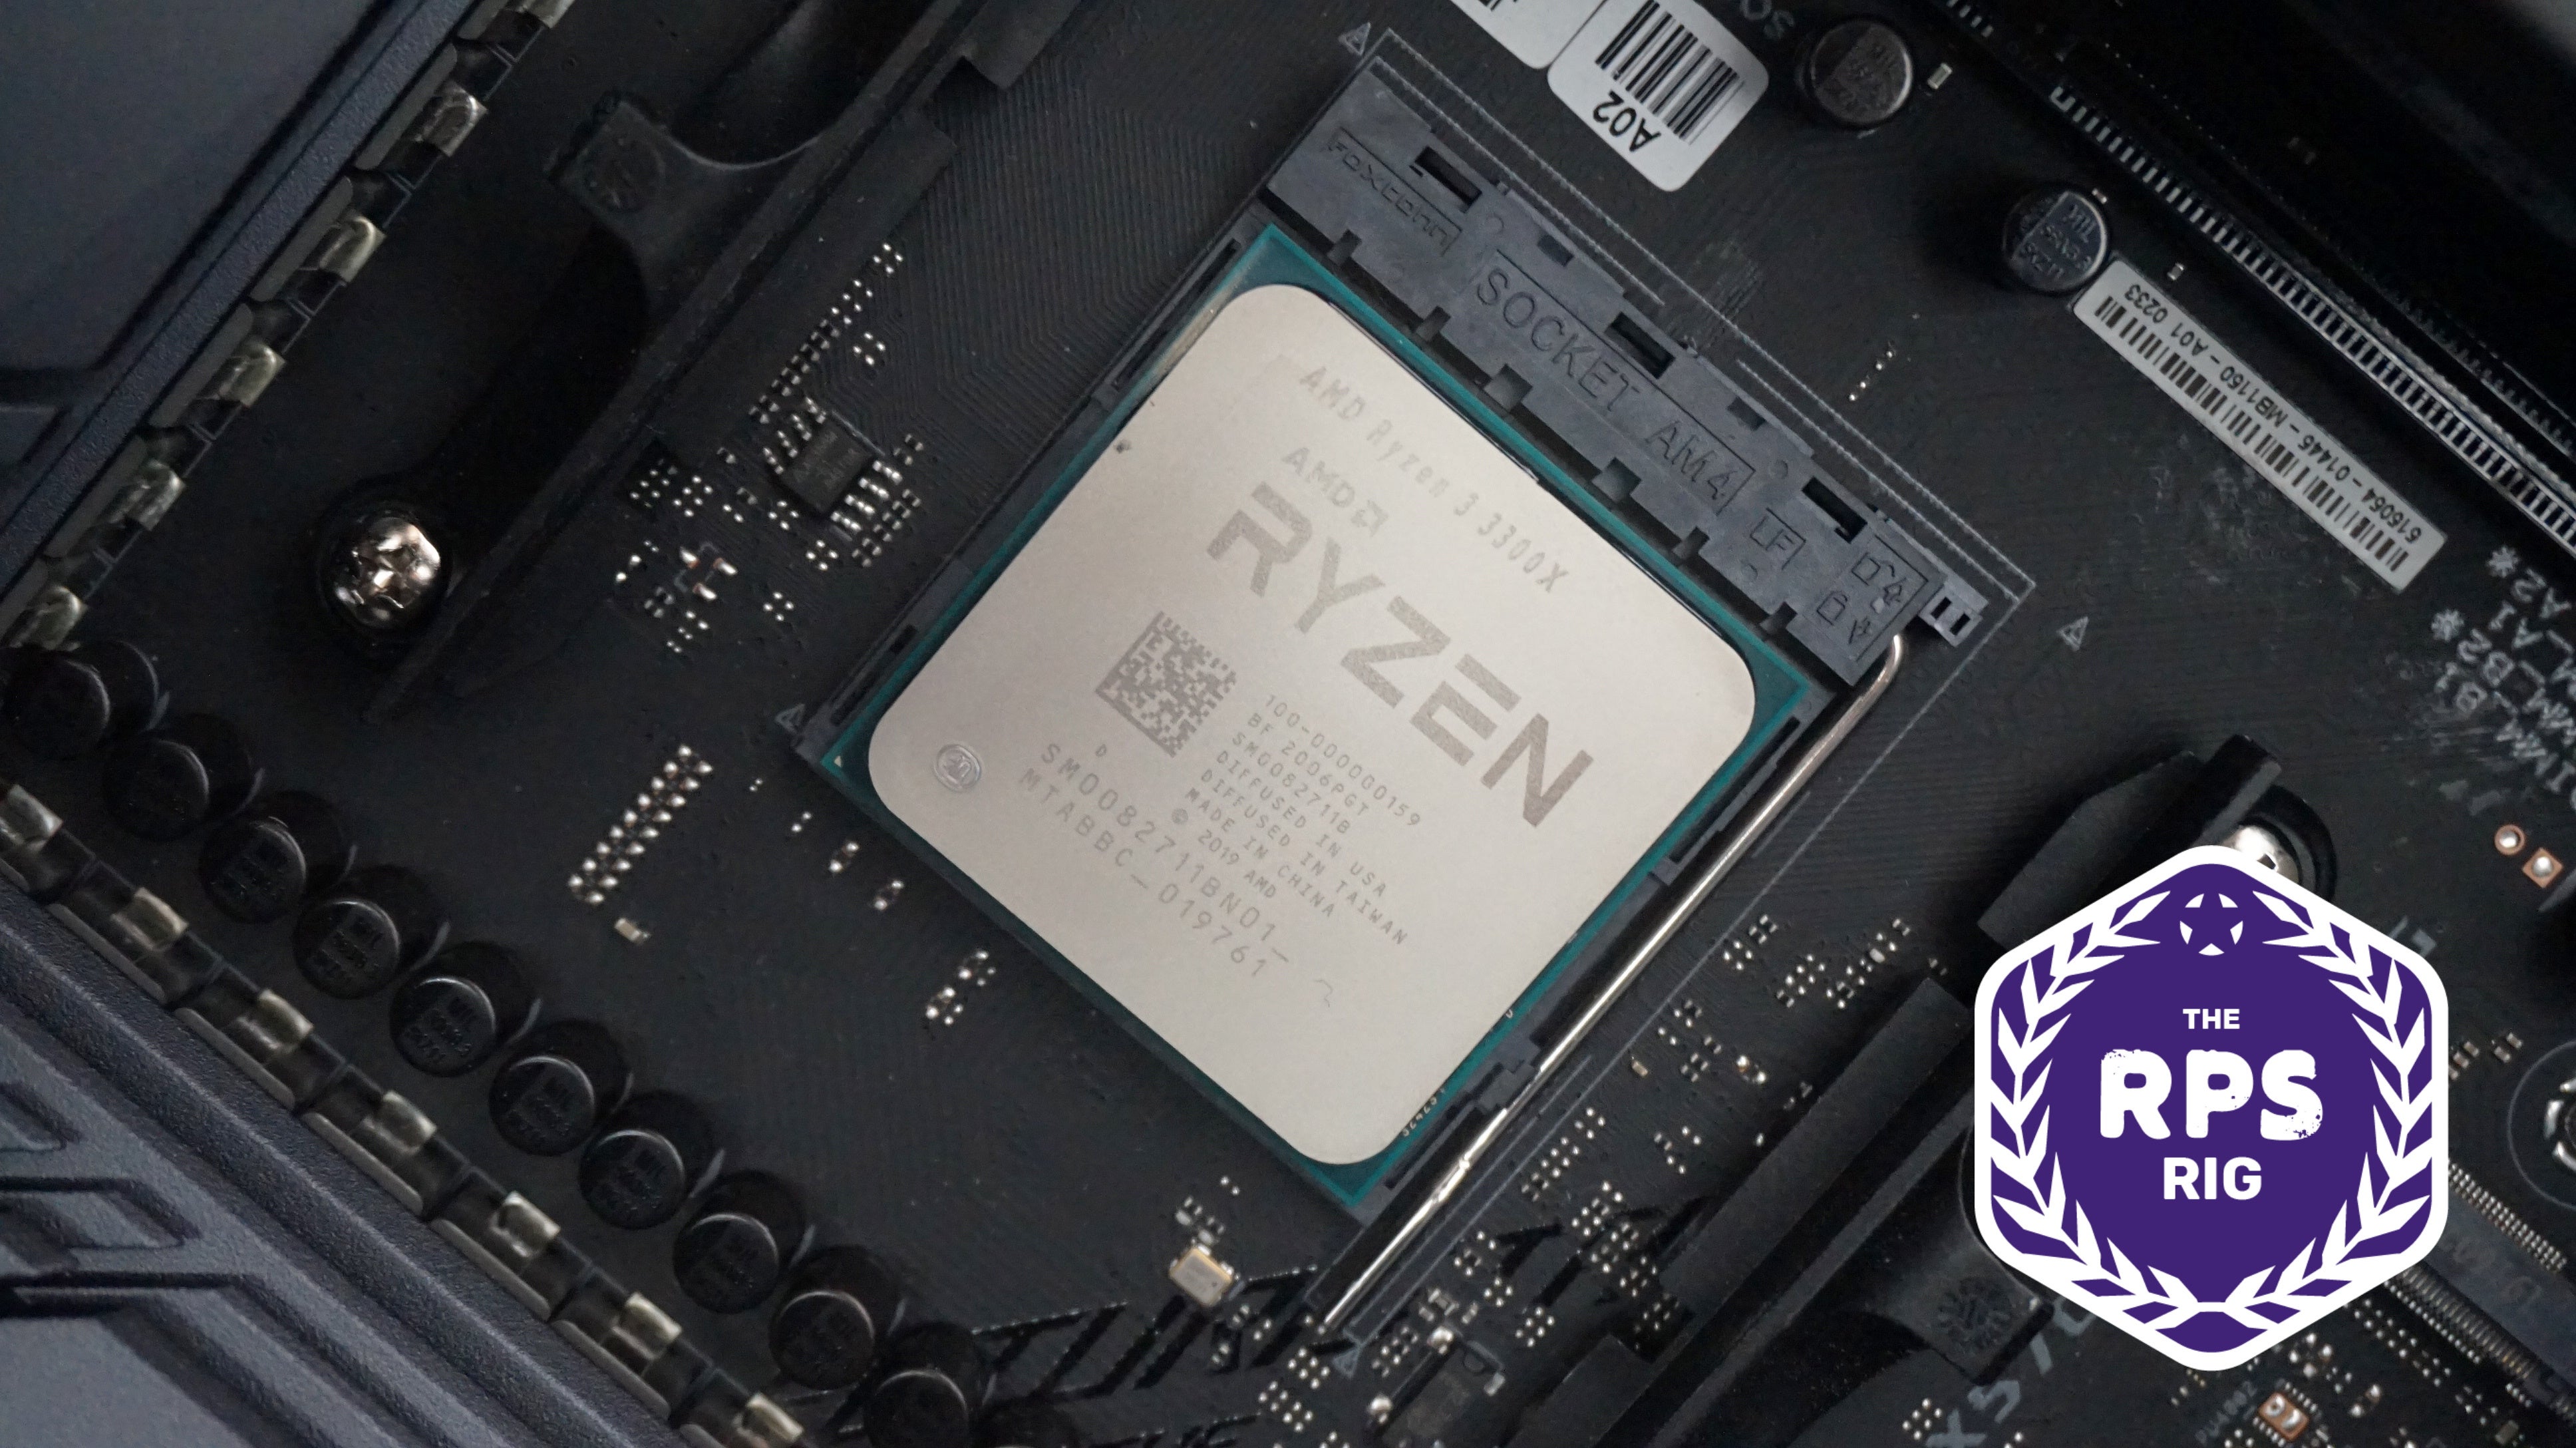 AMD Ryzen 3 3300X review: the $120 Core i5 killer | Rock Paper Shotgun